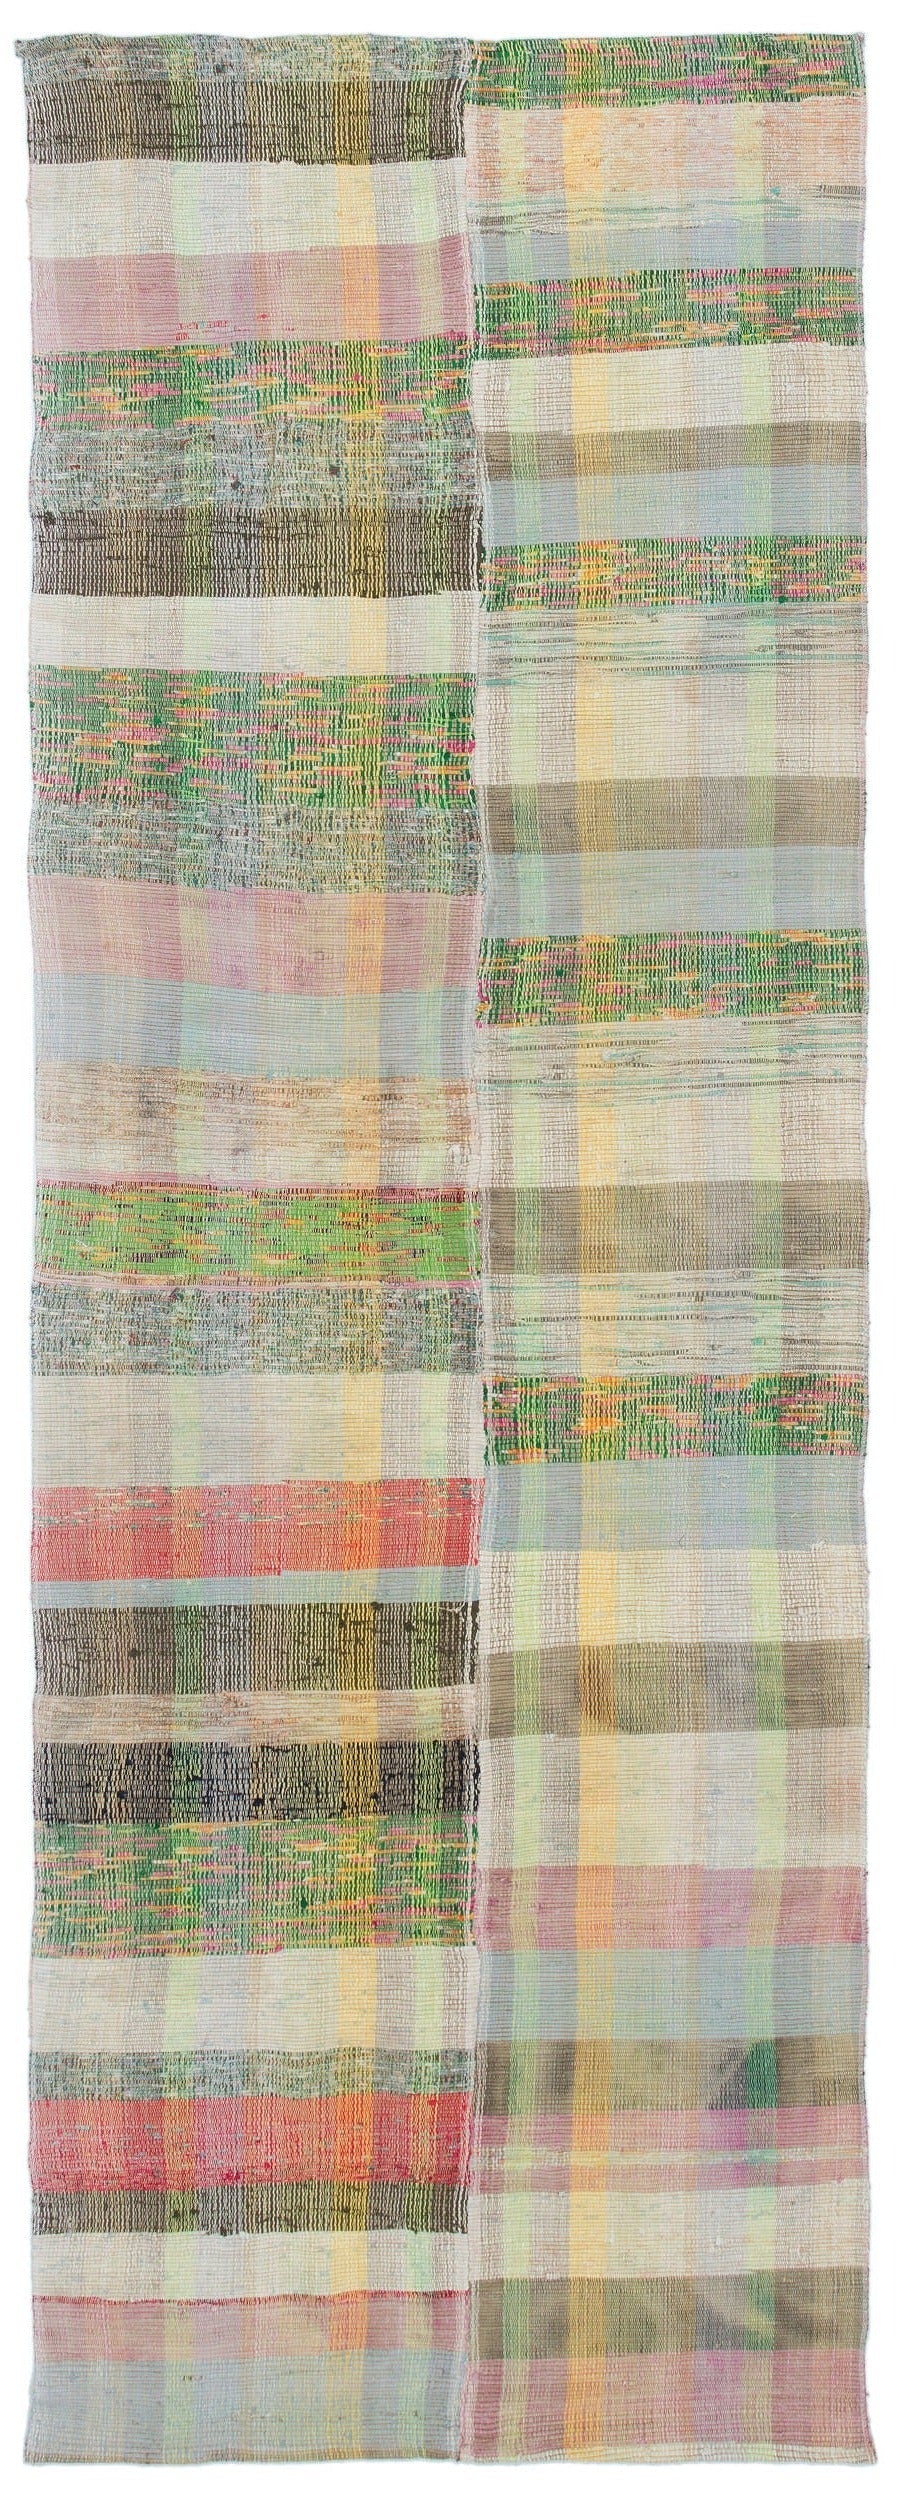 Cretan Beige Striped Wool Hand-Woven Carpet 086 x 260